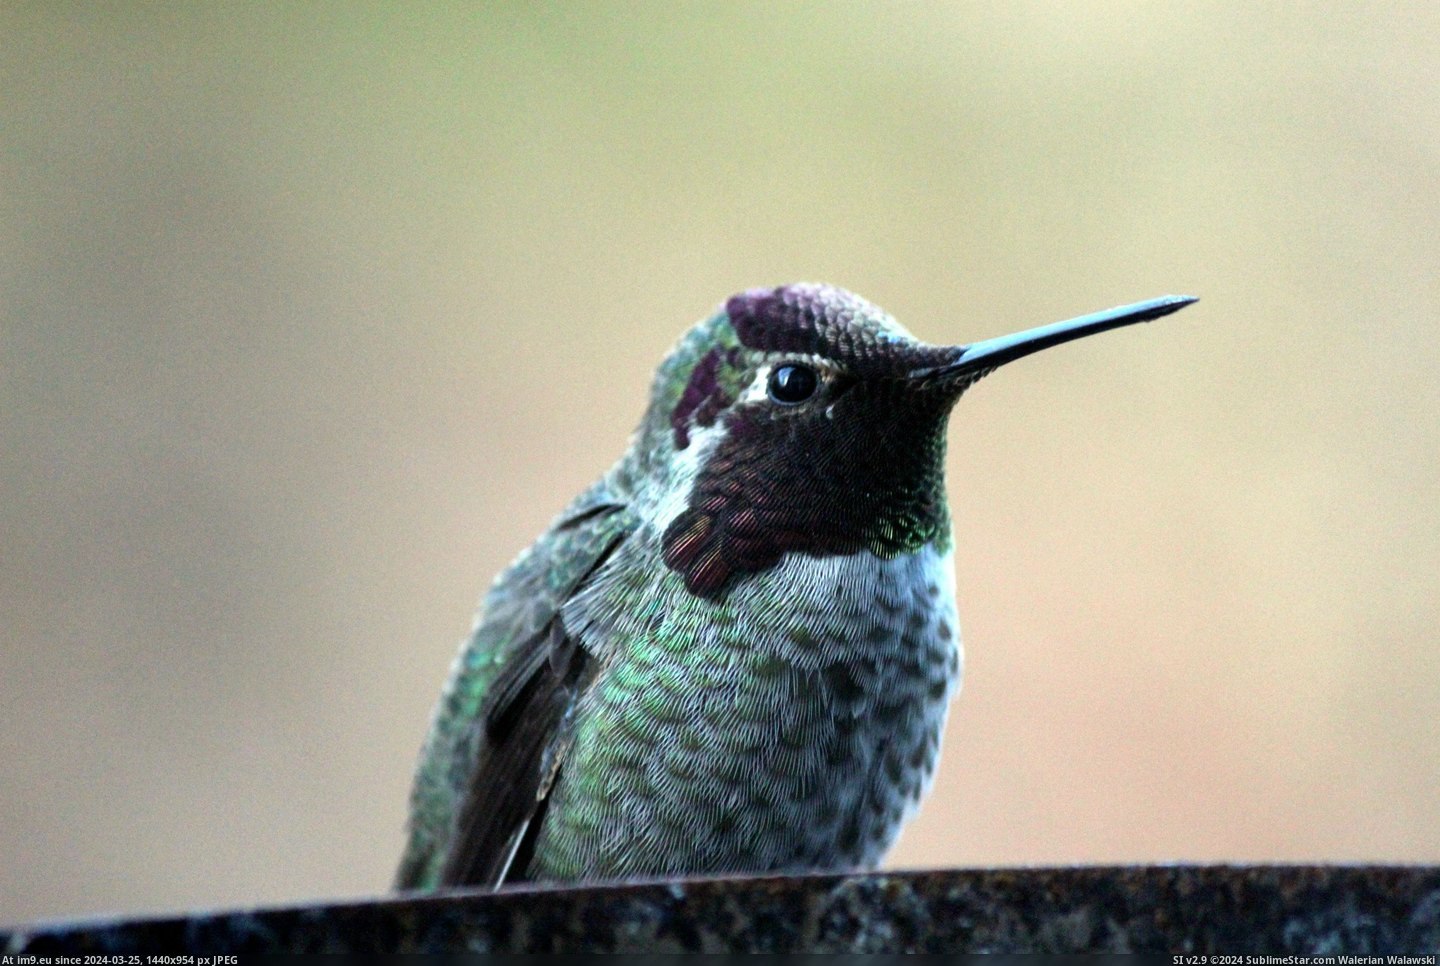 #Was #Morning #Showing #Changed #Angle #Hummingbird #Iridescent #Off #Head #Hood [Pics] A hummingbird showing off his iridescent hood this morning. The only thing that changed was the angle of his head. 2 Pic. (Изображение из альбом My r/PICS favs))